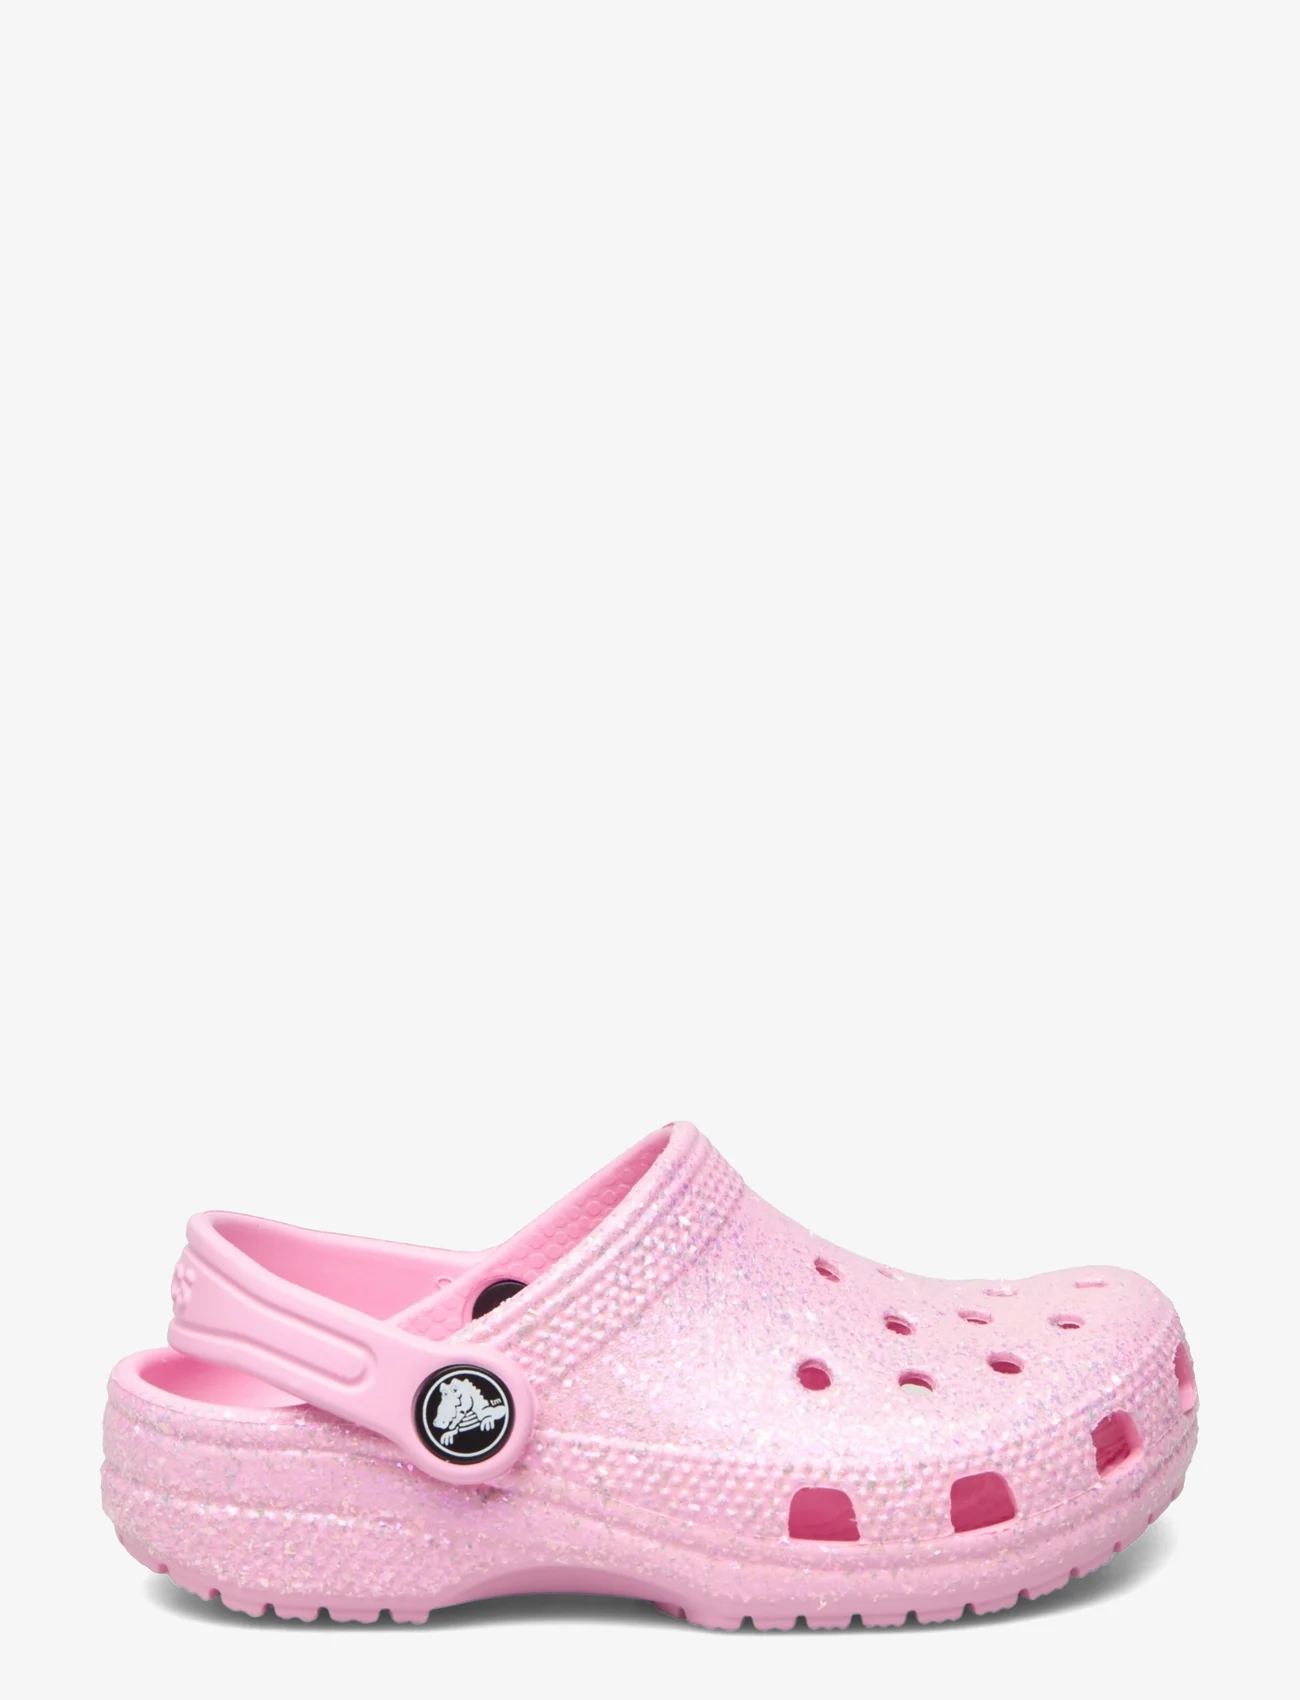 Crocs - Classic Glitter Clog T - sommerkupp - flamingo - 1